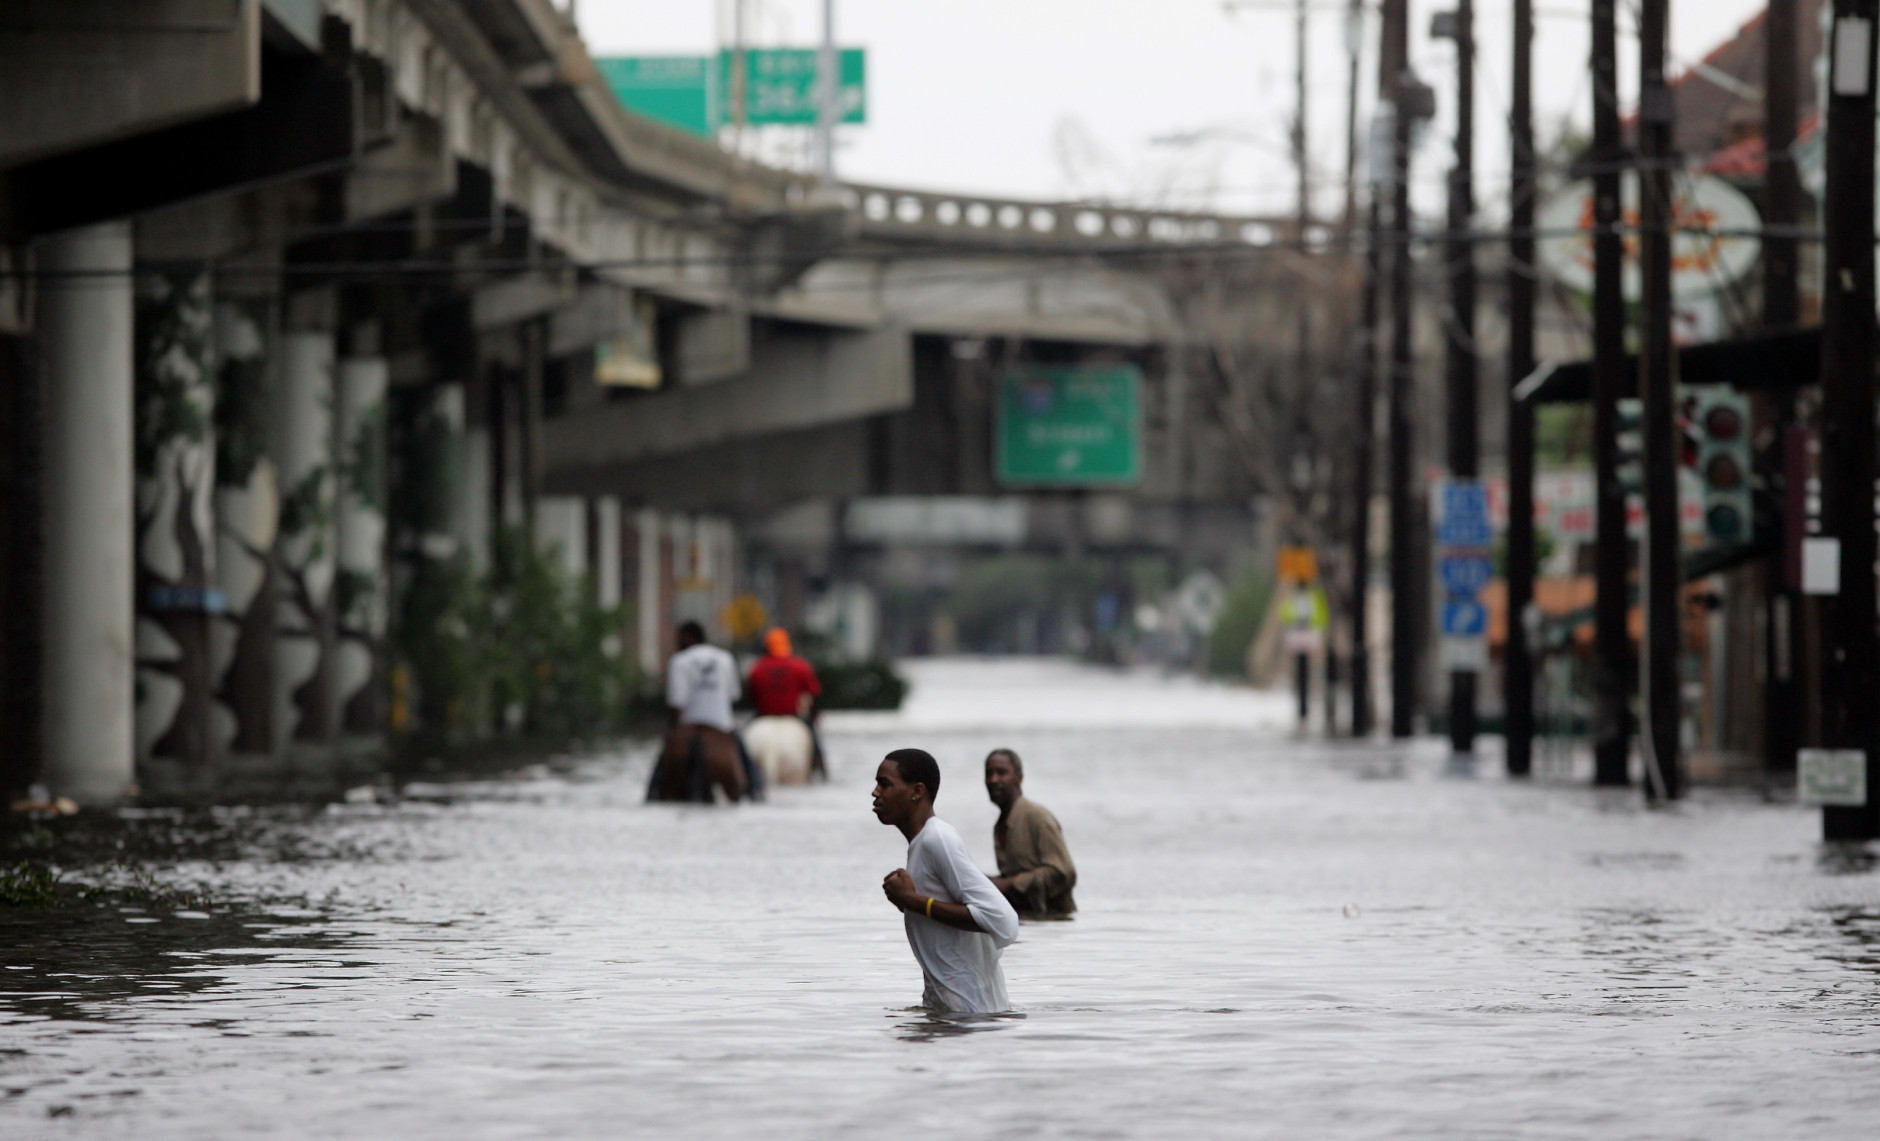 New Orleans residents walk through chest deep floodwater after Hurricane Katrina made landfall on the Louisiana coast on Monday, Aug. 29, 2005. (AP Photo/Dave Martin)